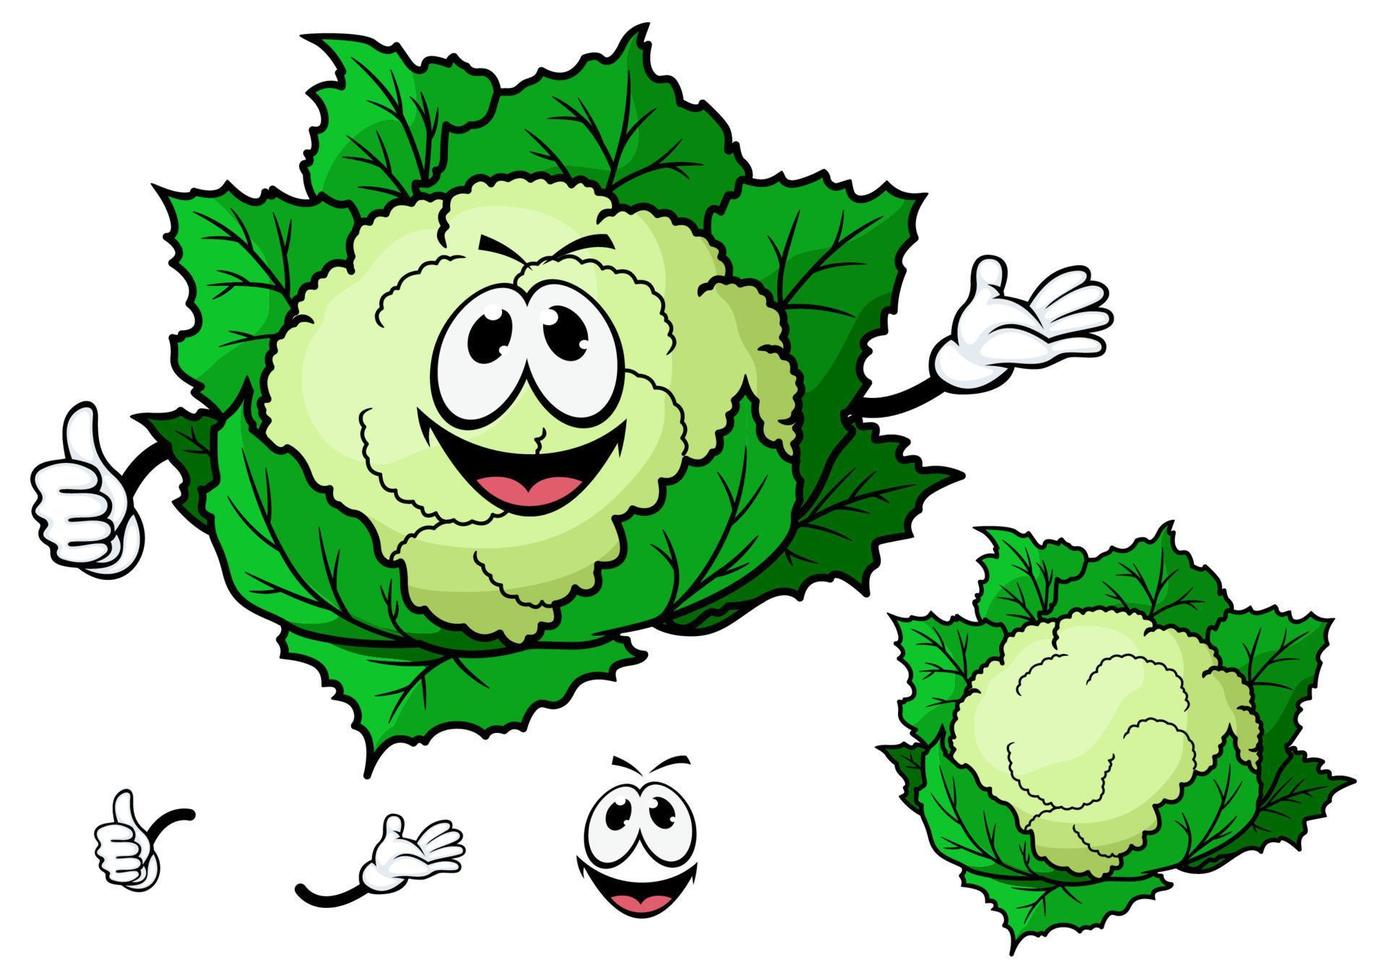 vegetal de couve-flor feliz sorridente dos desenhos animados vetor